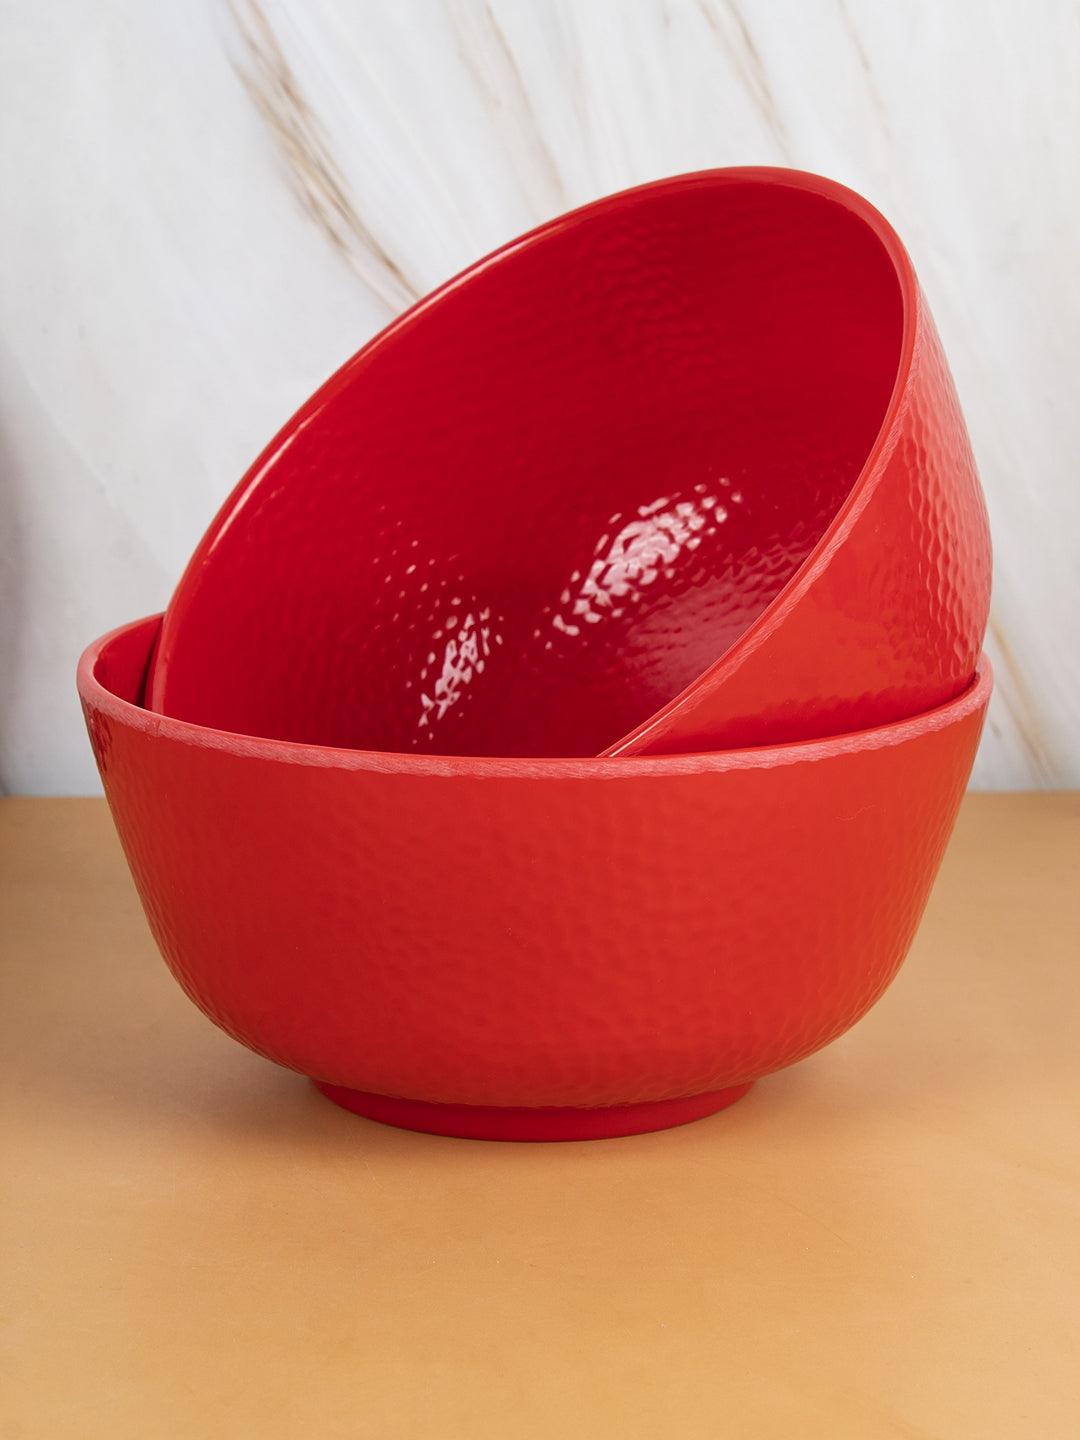 Market 99 Melamine Tableware Red Serving Bowls for Dining Table (Set Of 2, 1300mL ) - MARKET 99